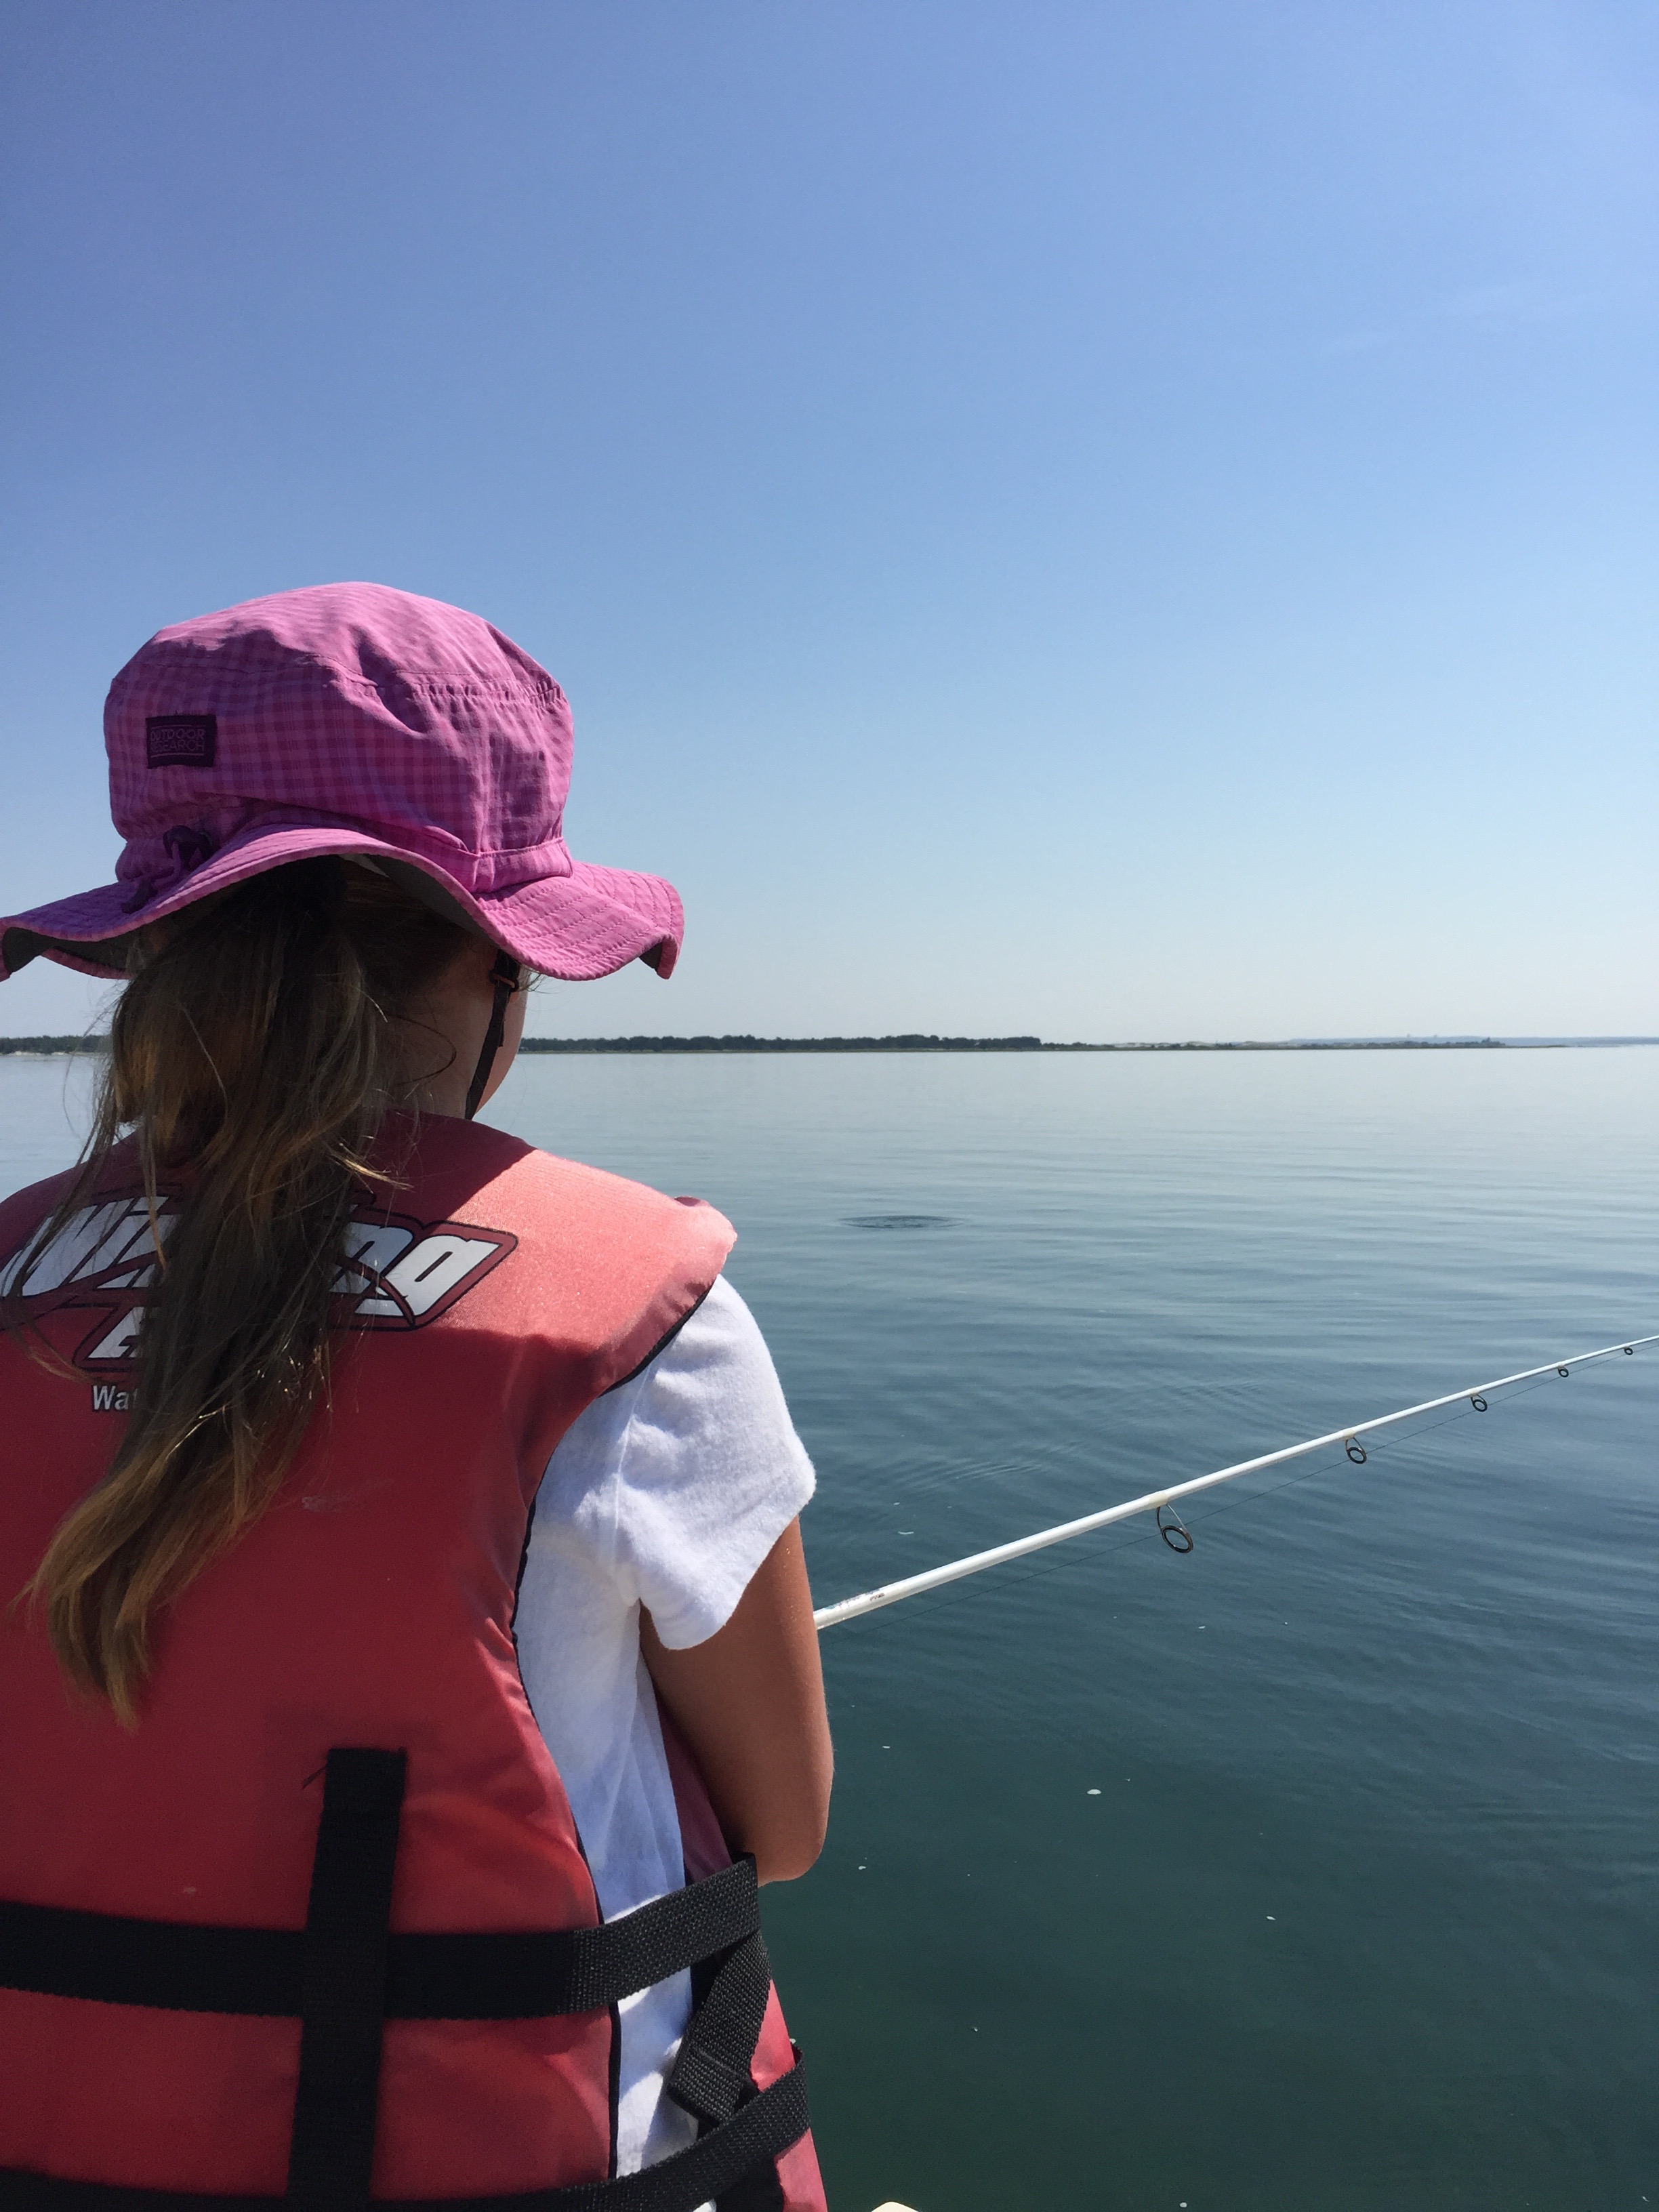 Little Girl Fishing